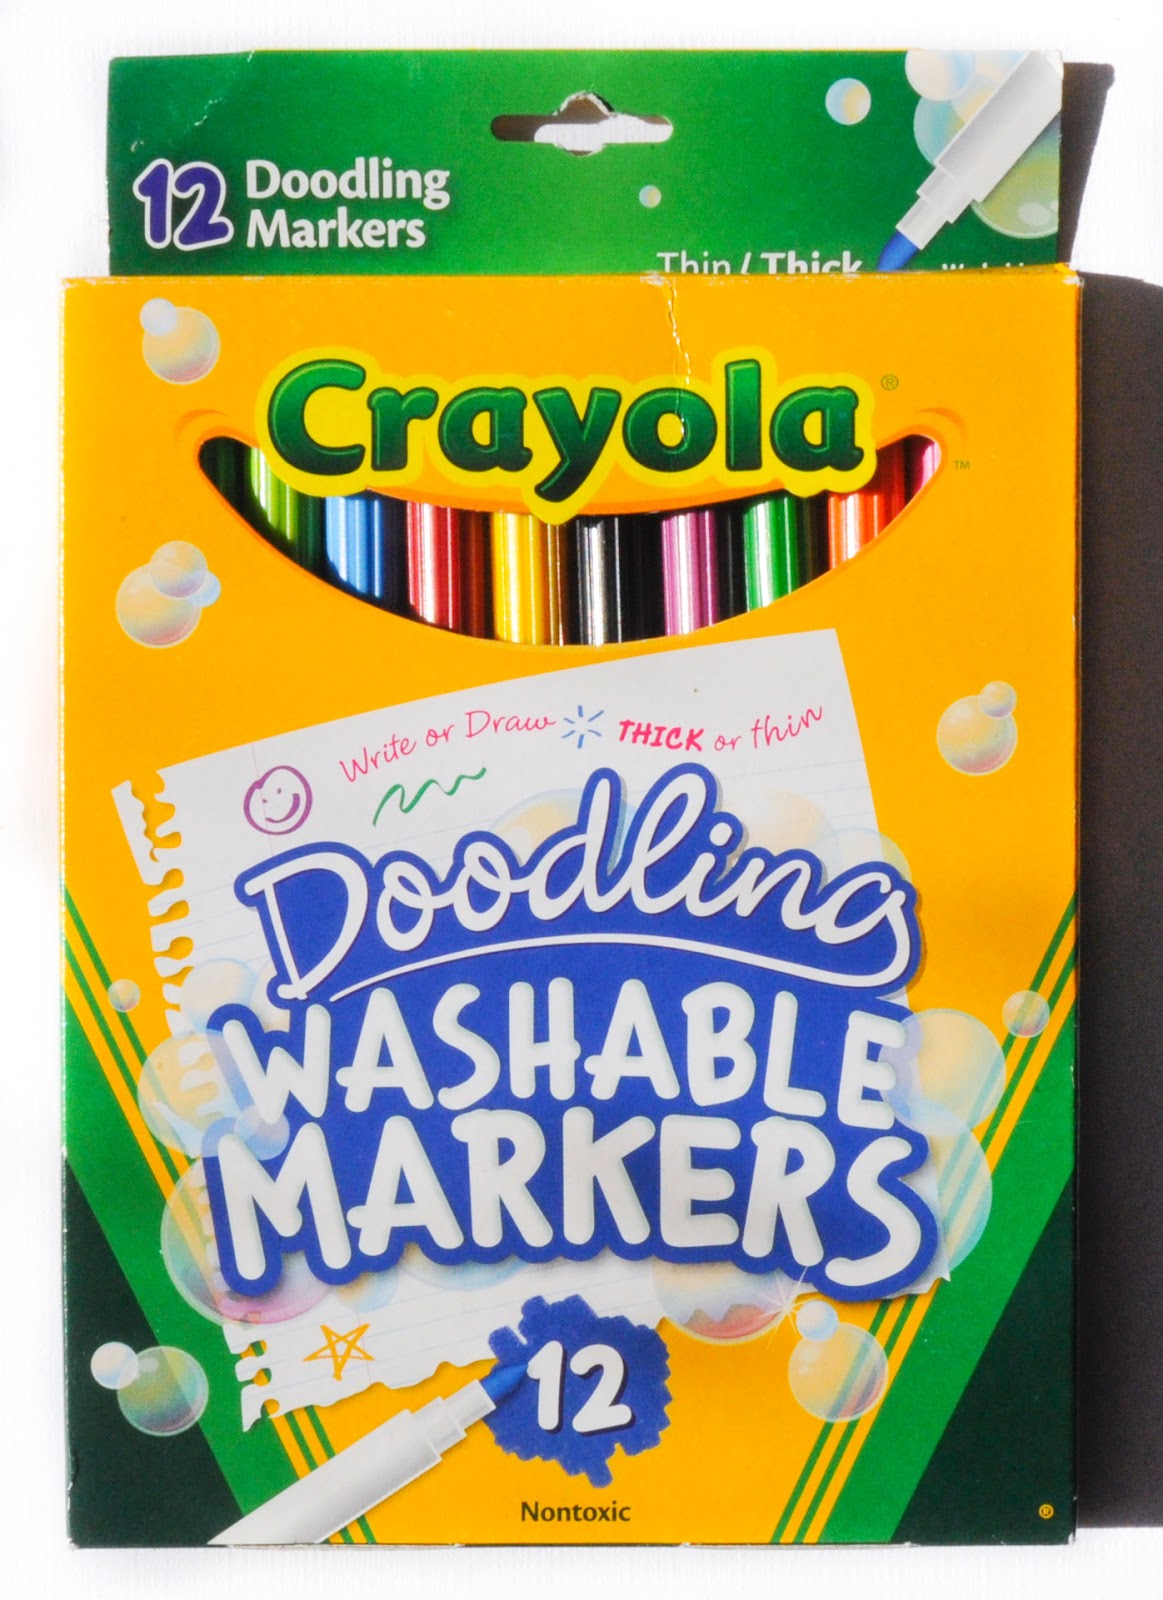 Crayola My First Crayola Bathtub Markers, 4 Count